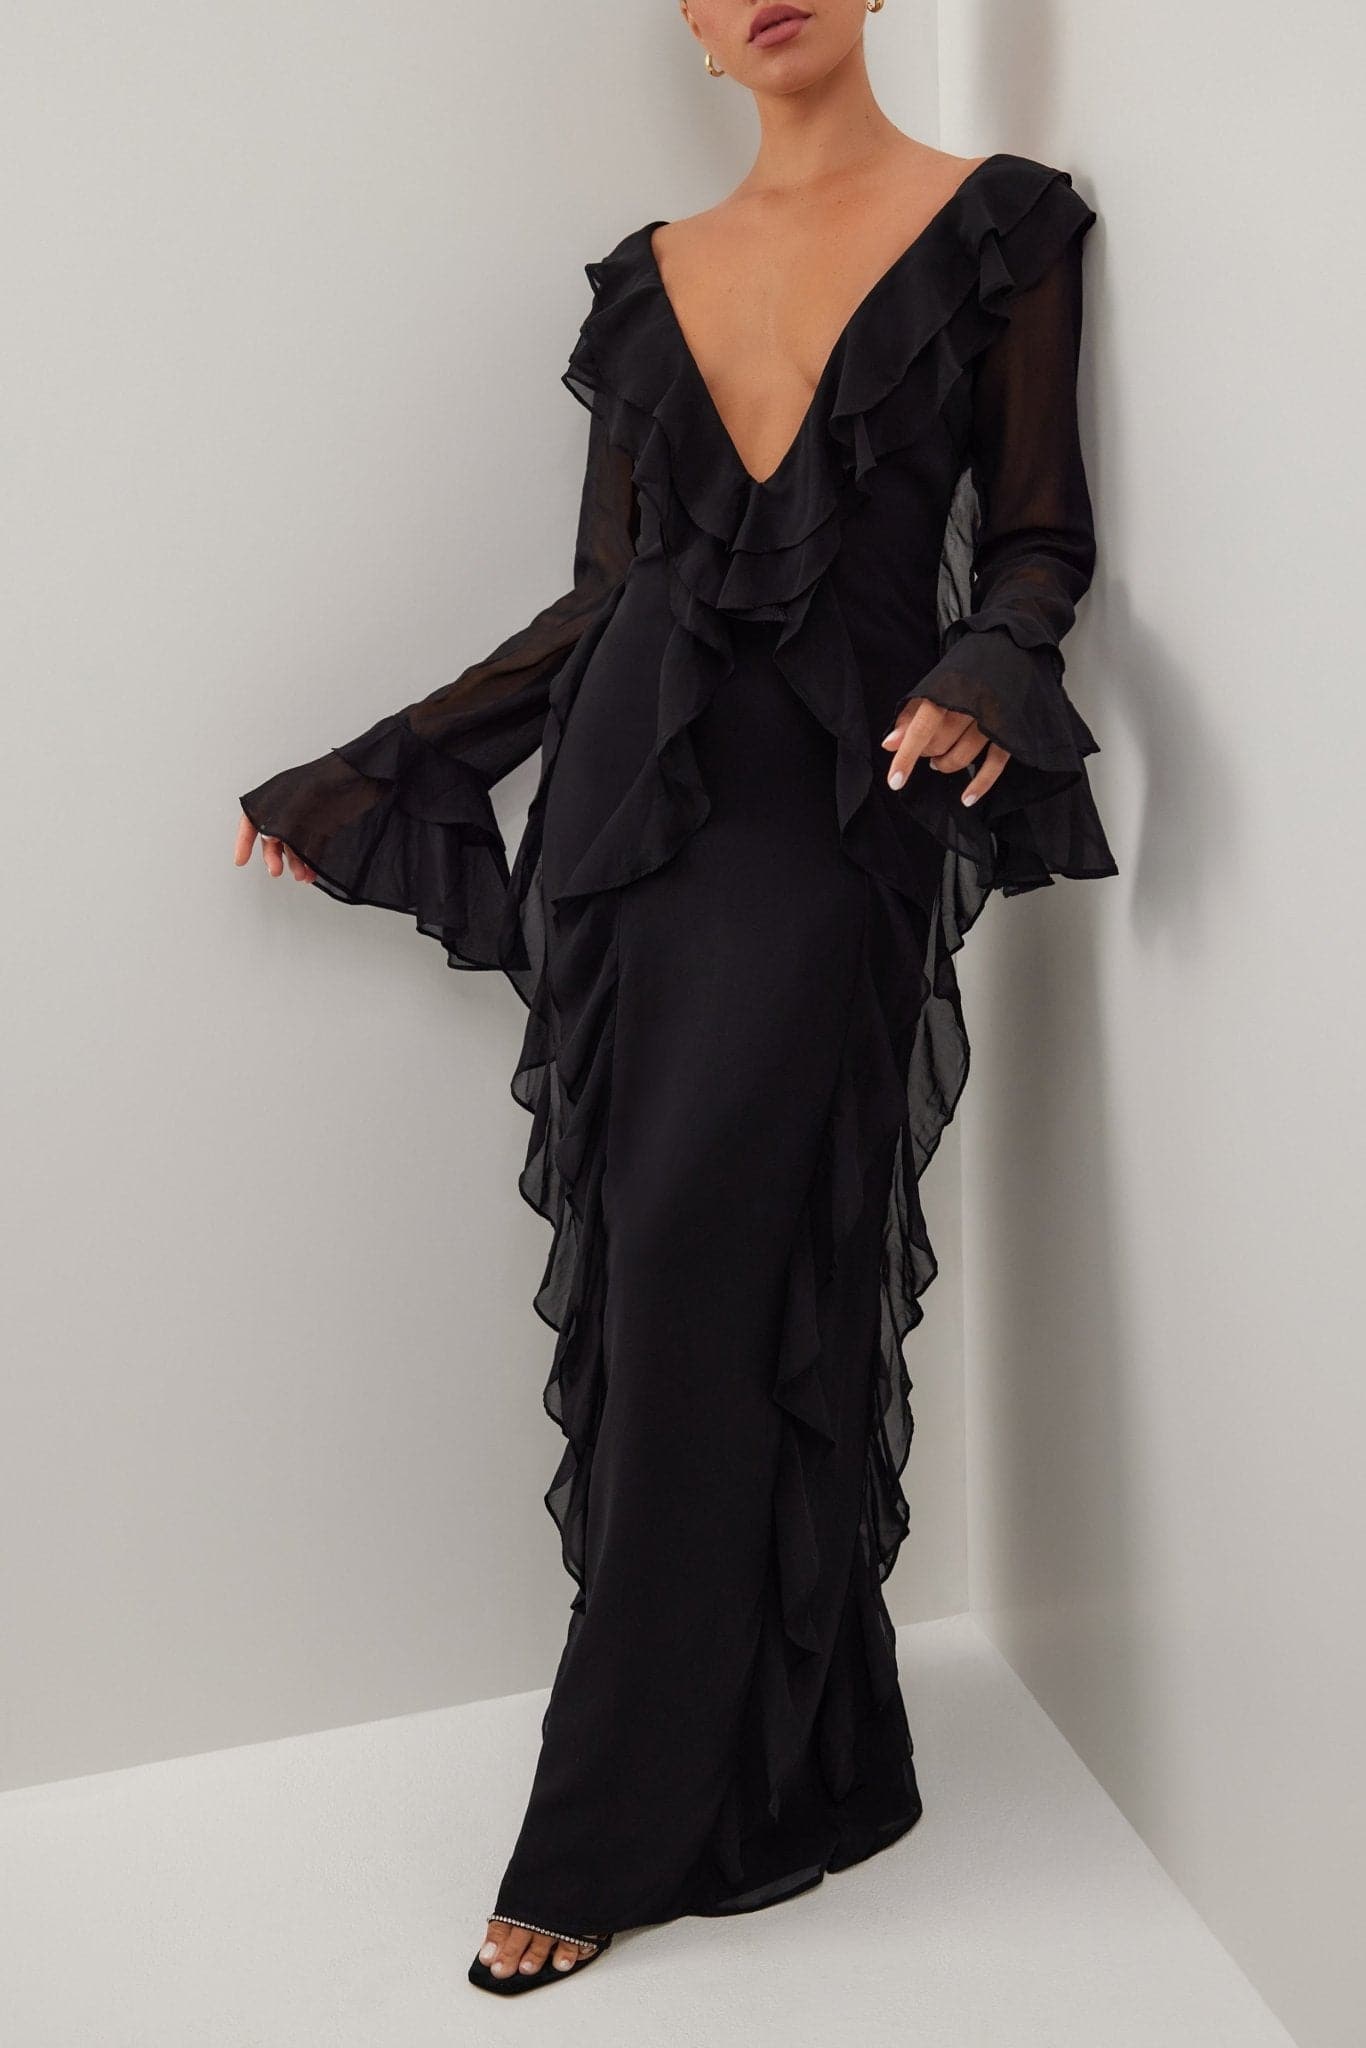 Taylor Hill Black Tulle Backless Halter Long Dress - Xdressy